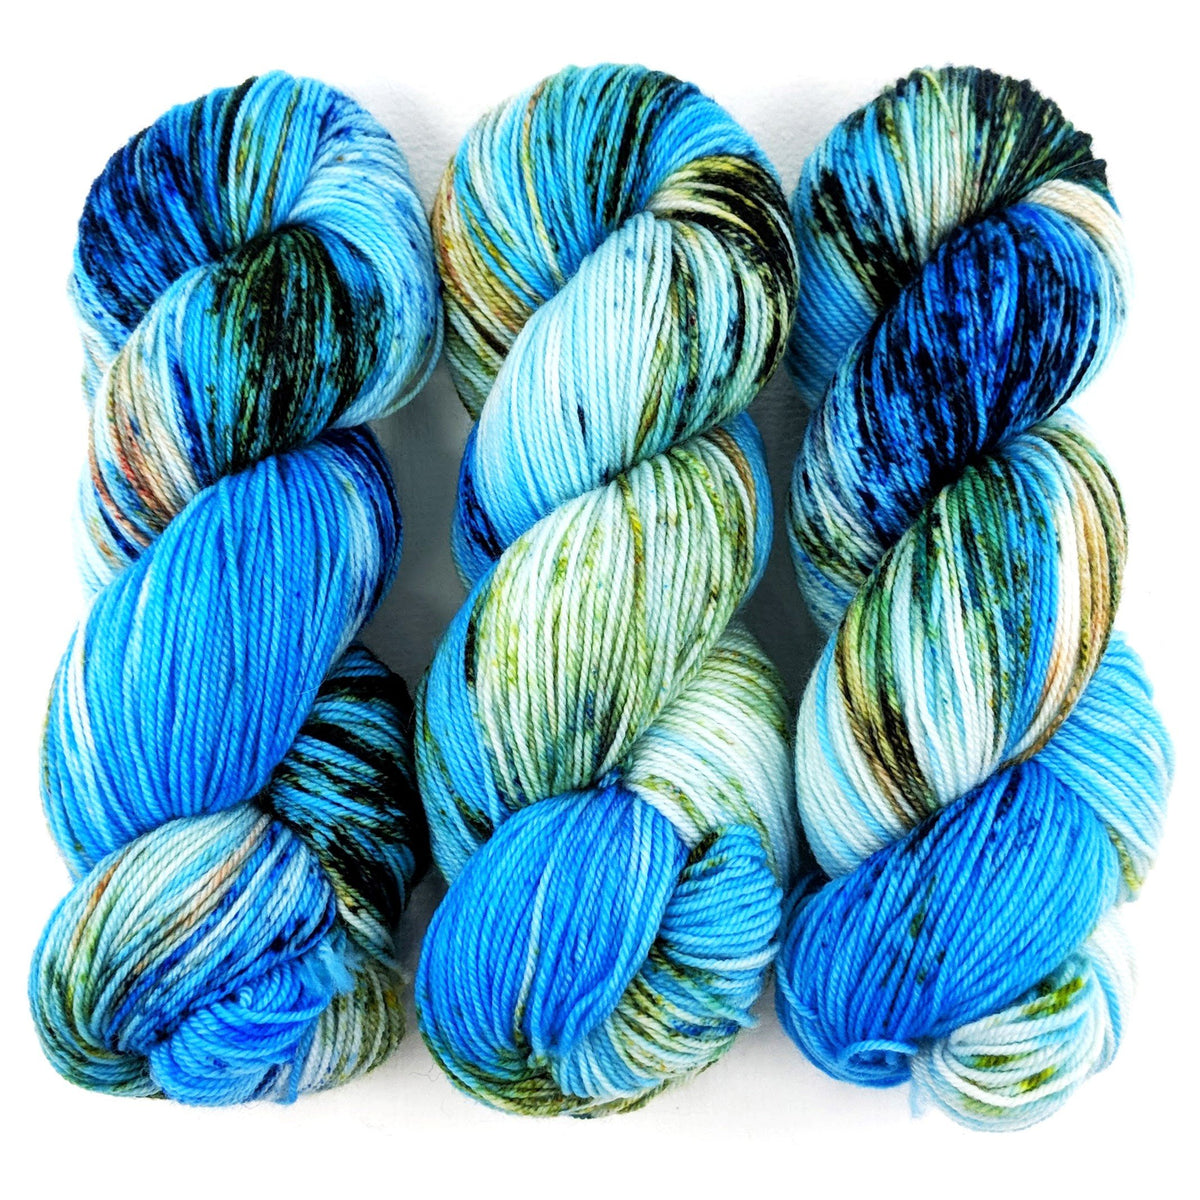 Degas - The Blue Dancers - Nettle Soft DK - Dyed Stock